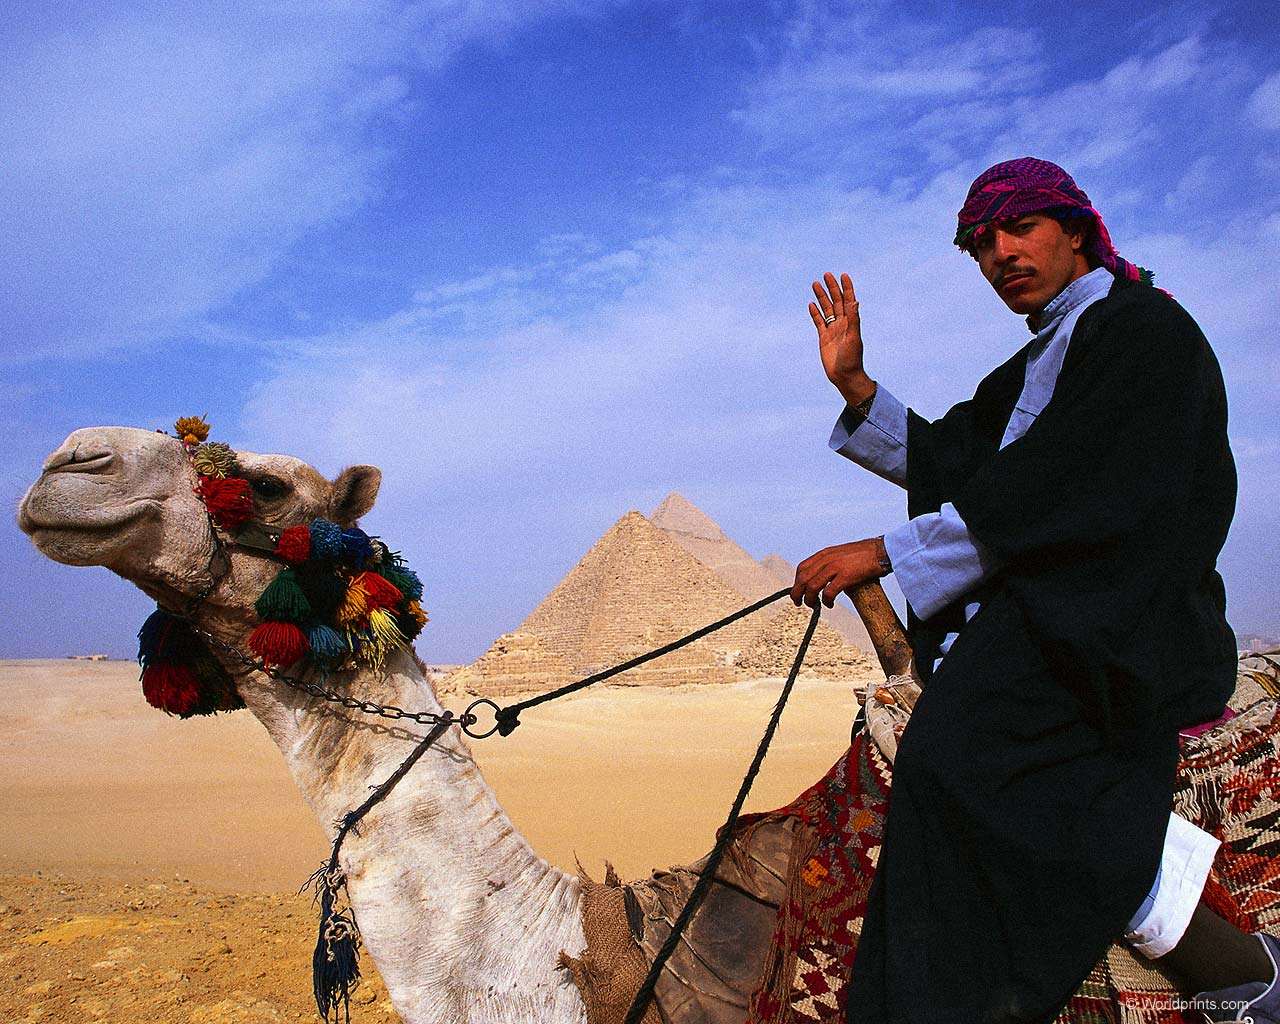 Фото на аву араб в пустыне